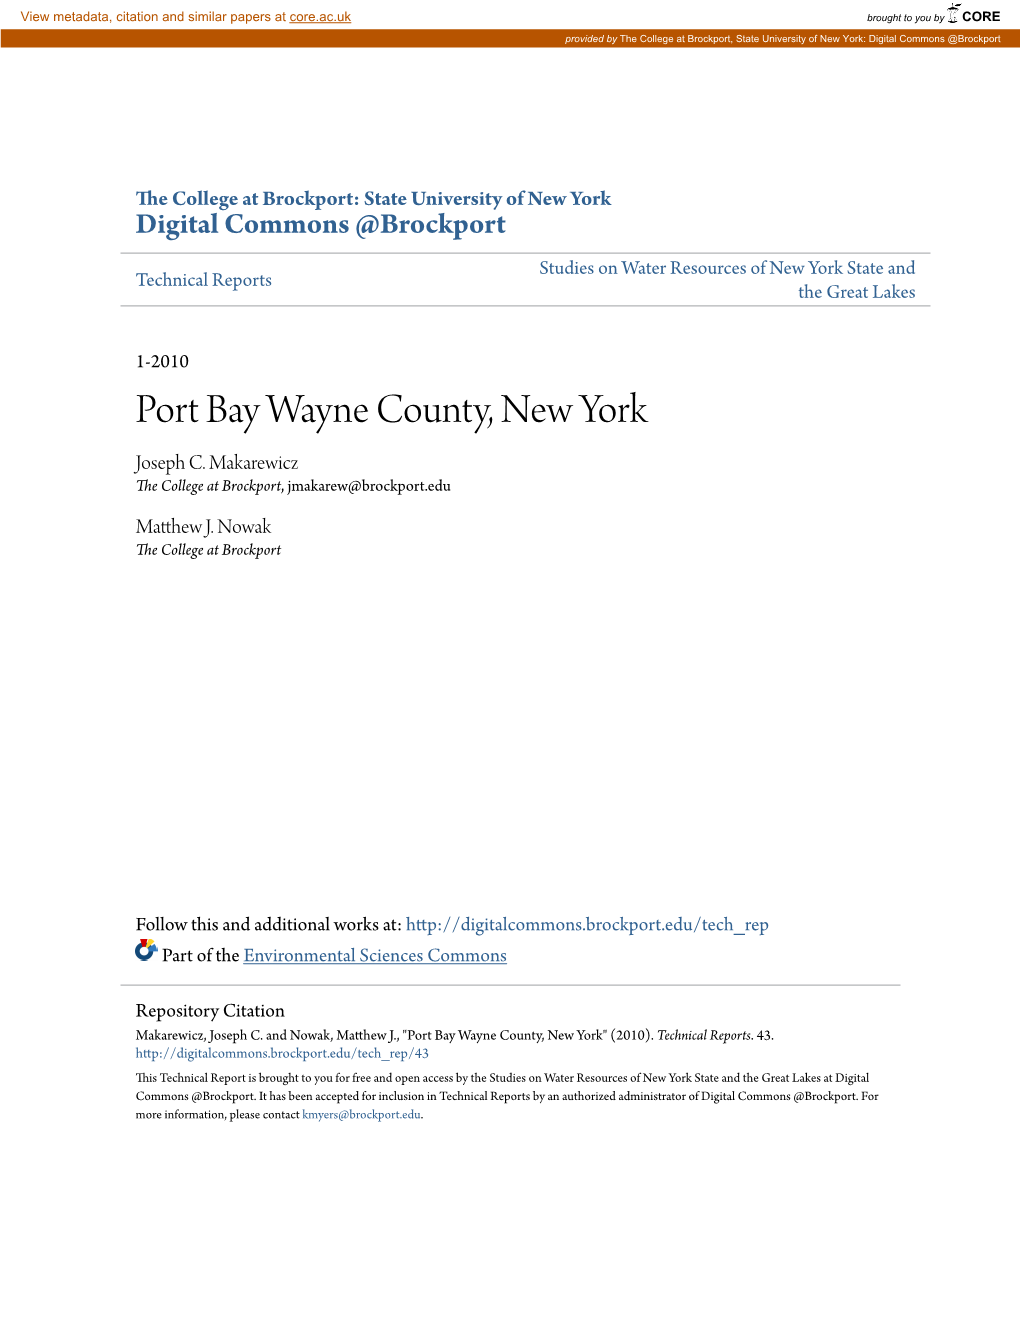 Port Bay Wayne County, New York Joseph C